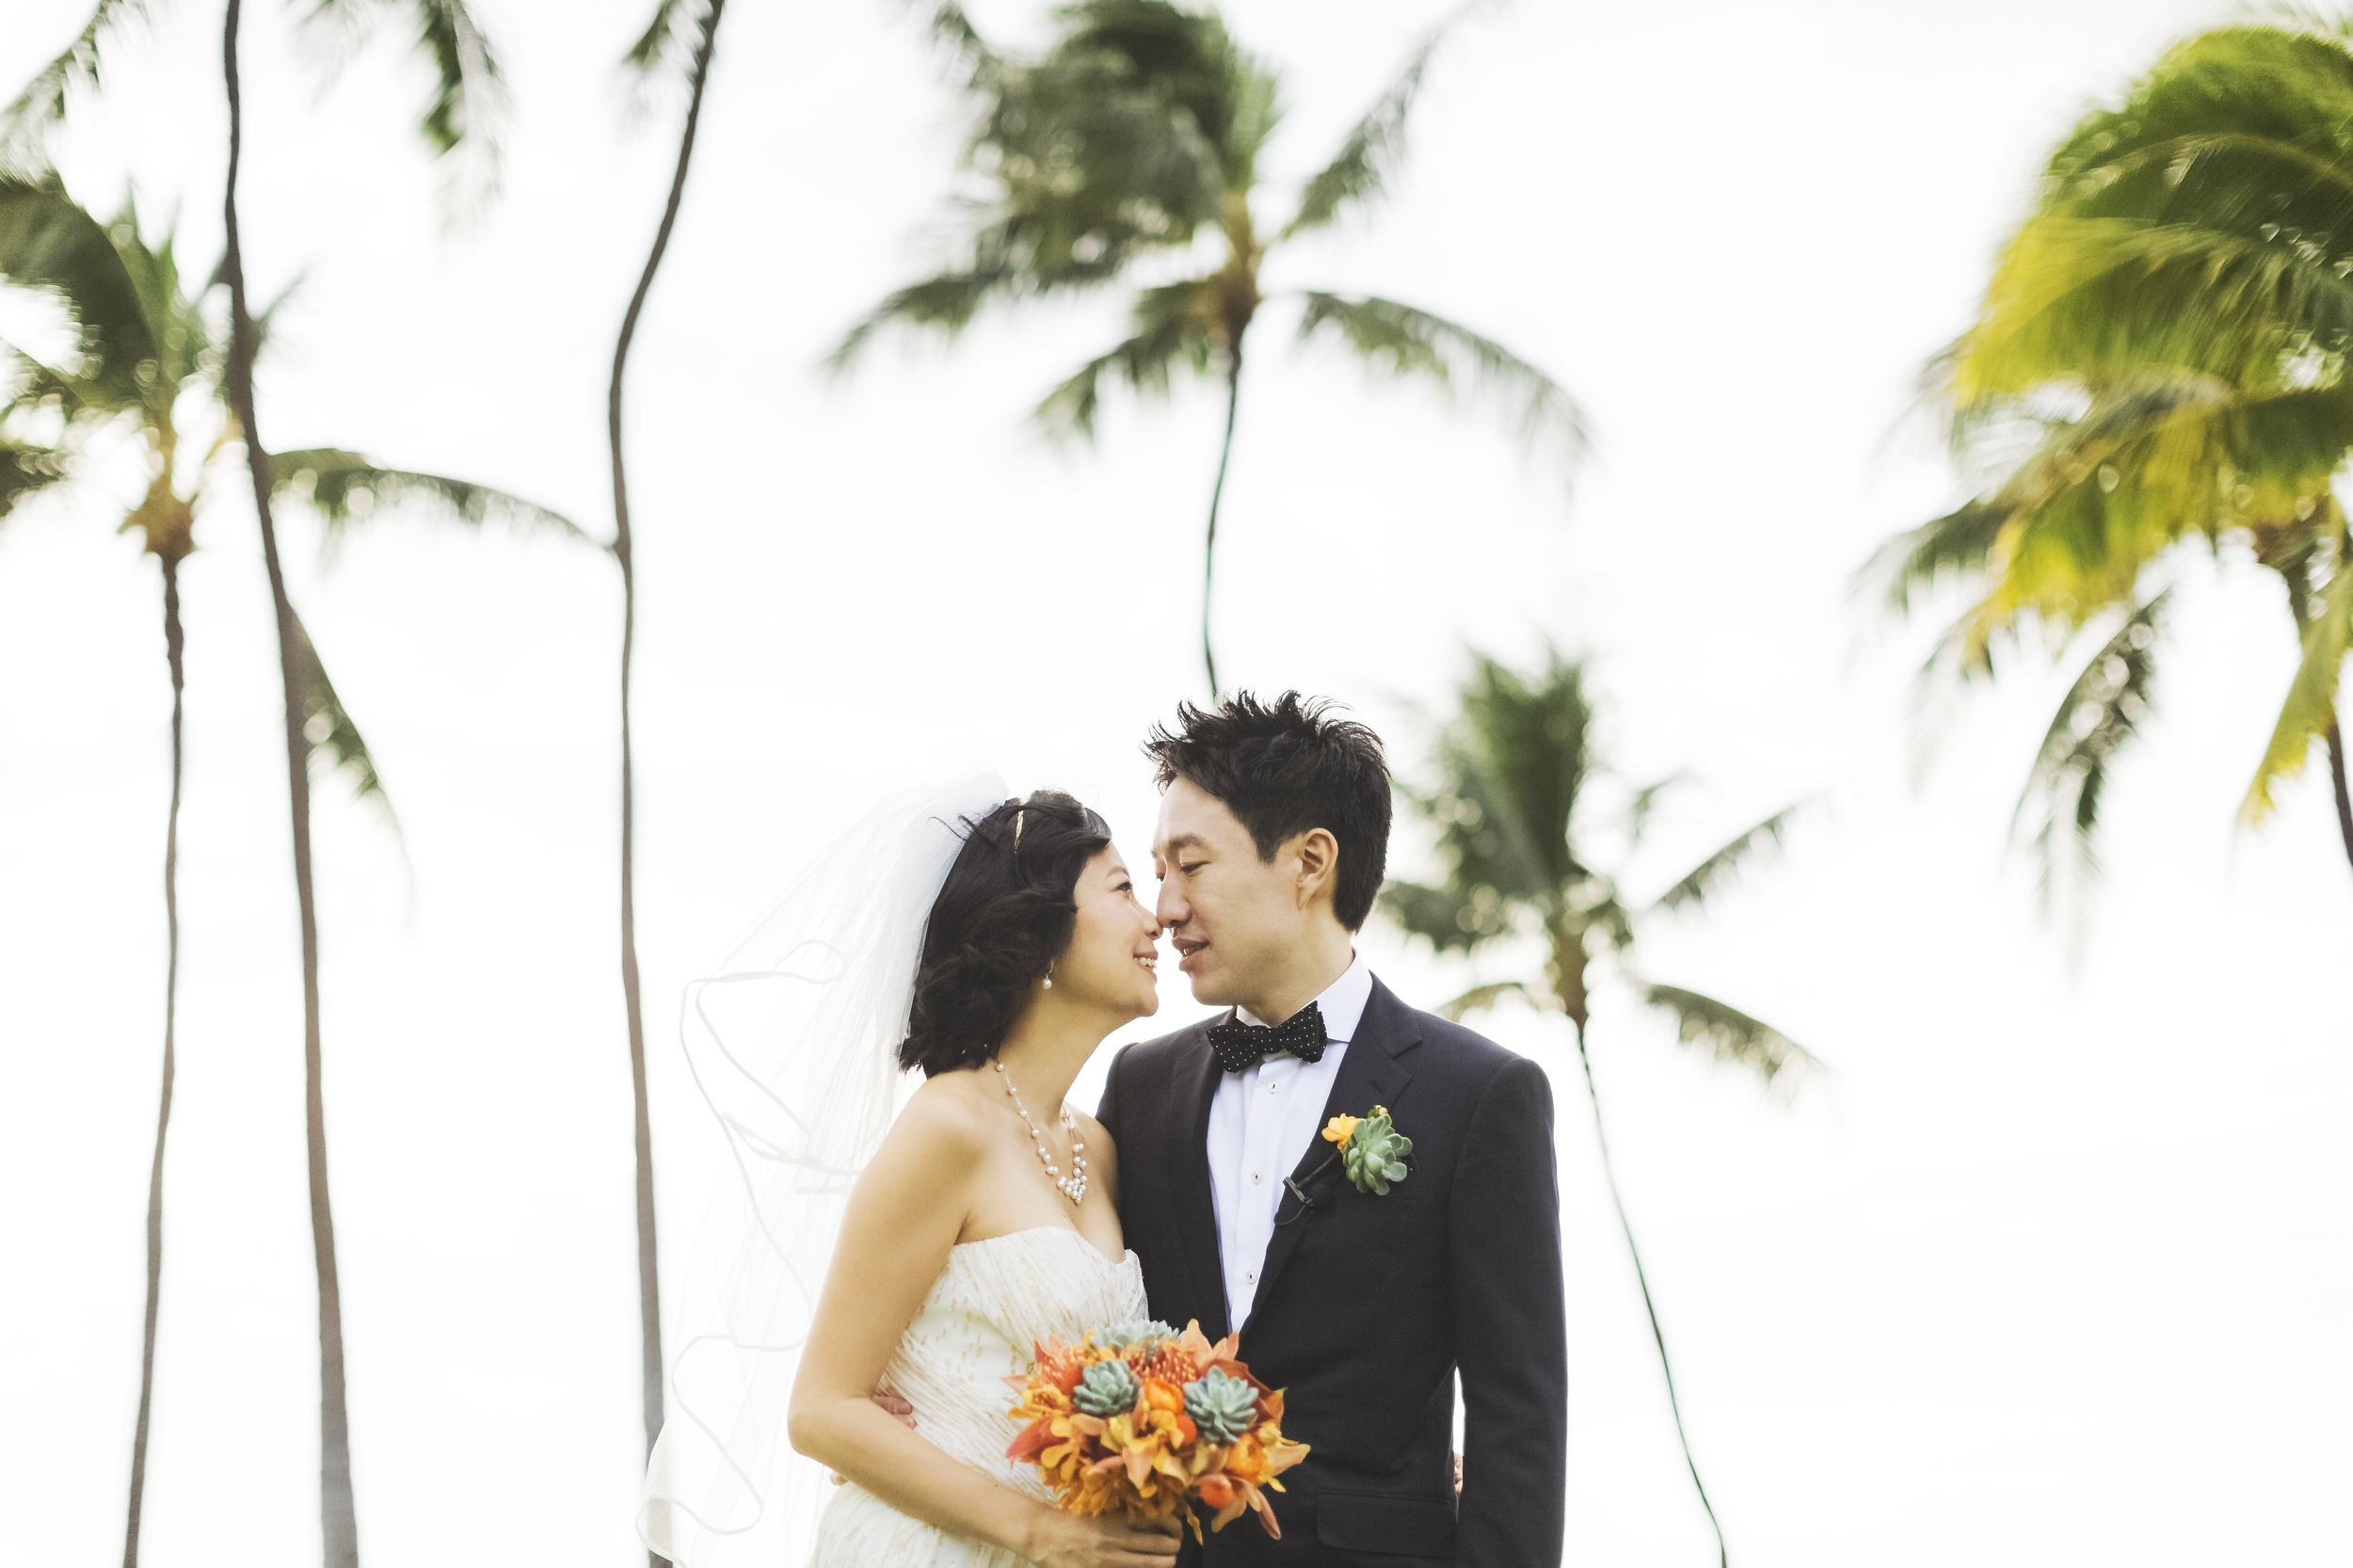 angie-diaz-photography-oahu-wedding-lanikuhonoa-shenshen-marshall-52.jpg